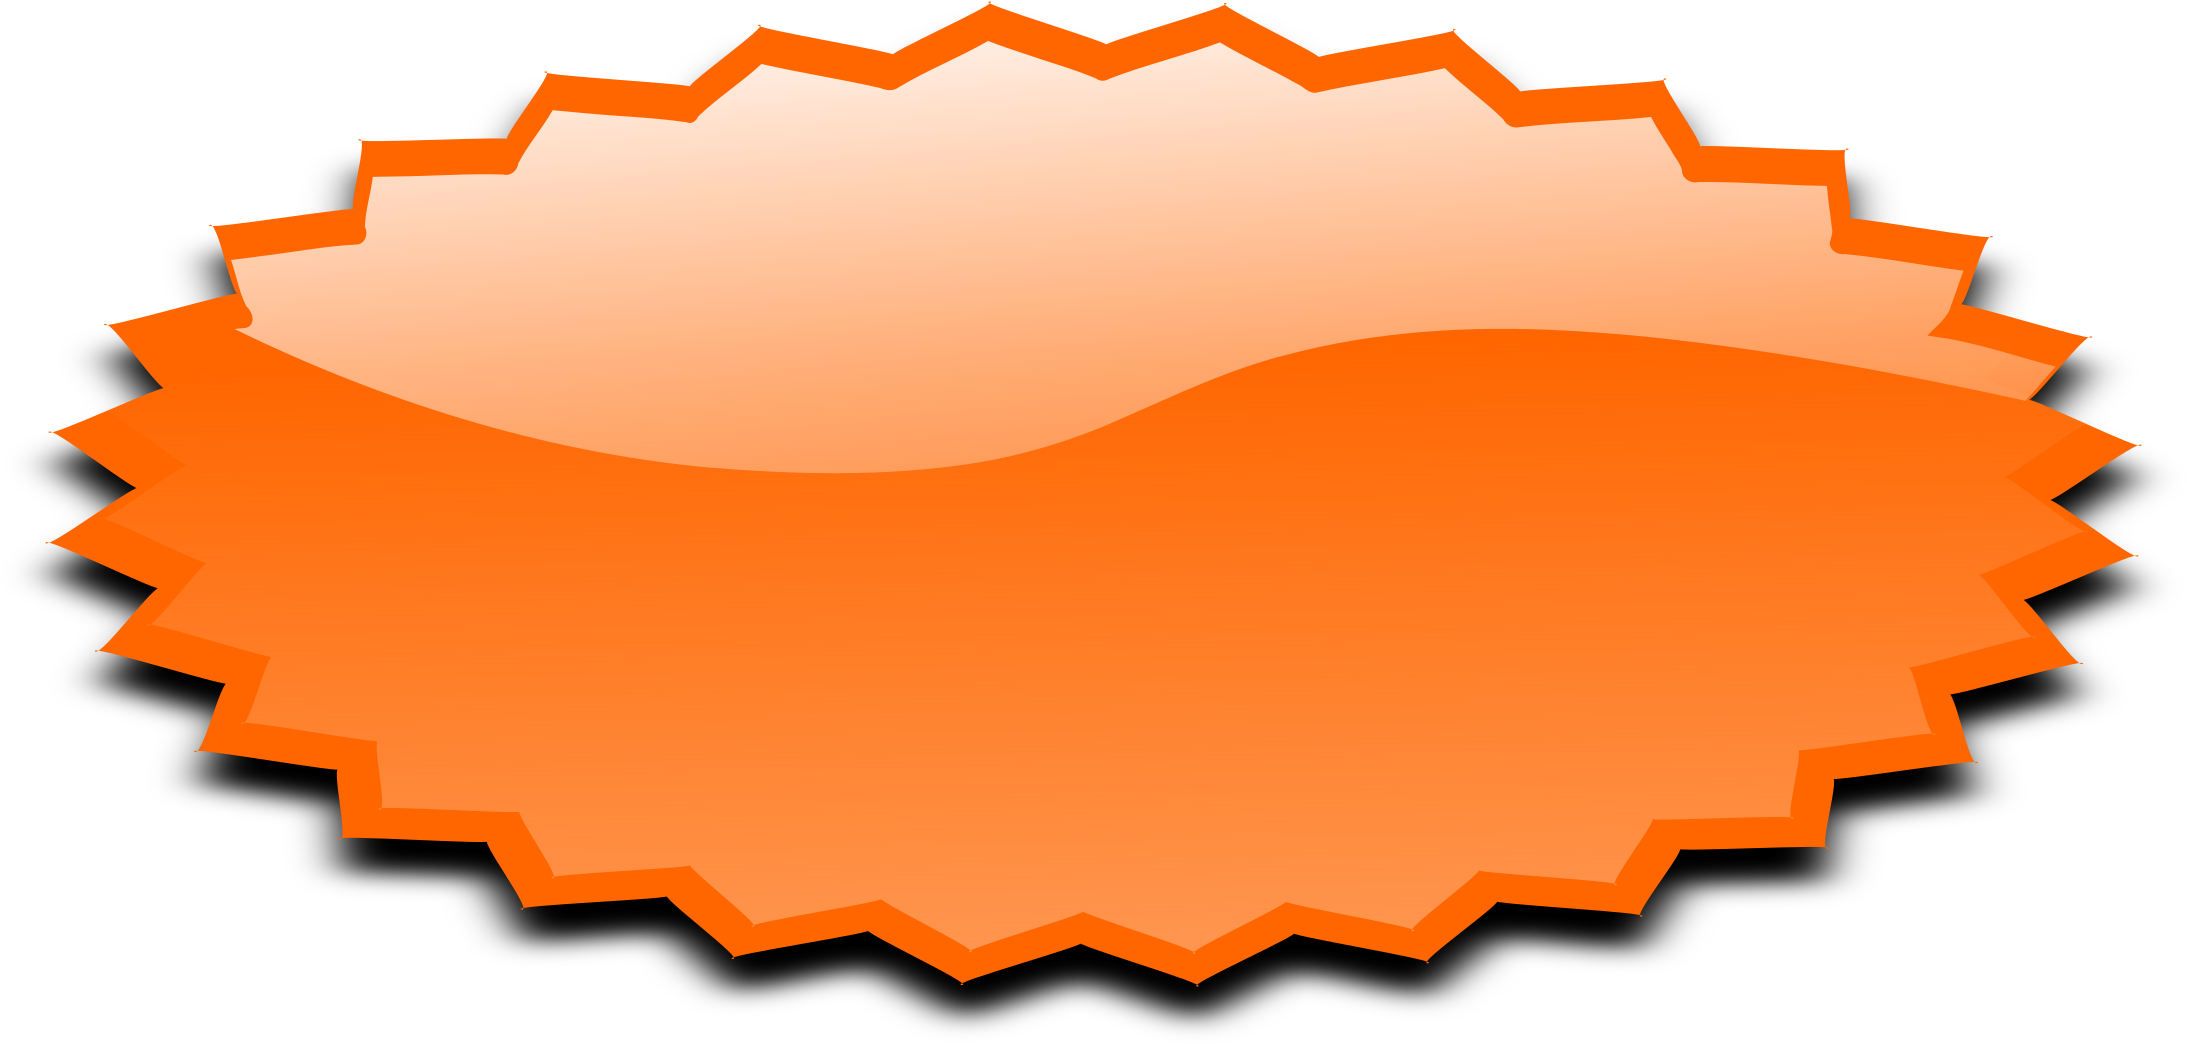 An Orange Rectangular Object With Black Edges